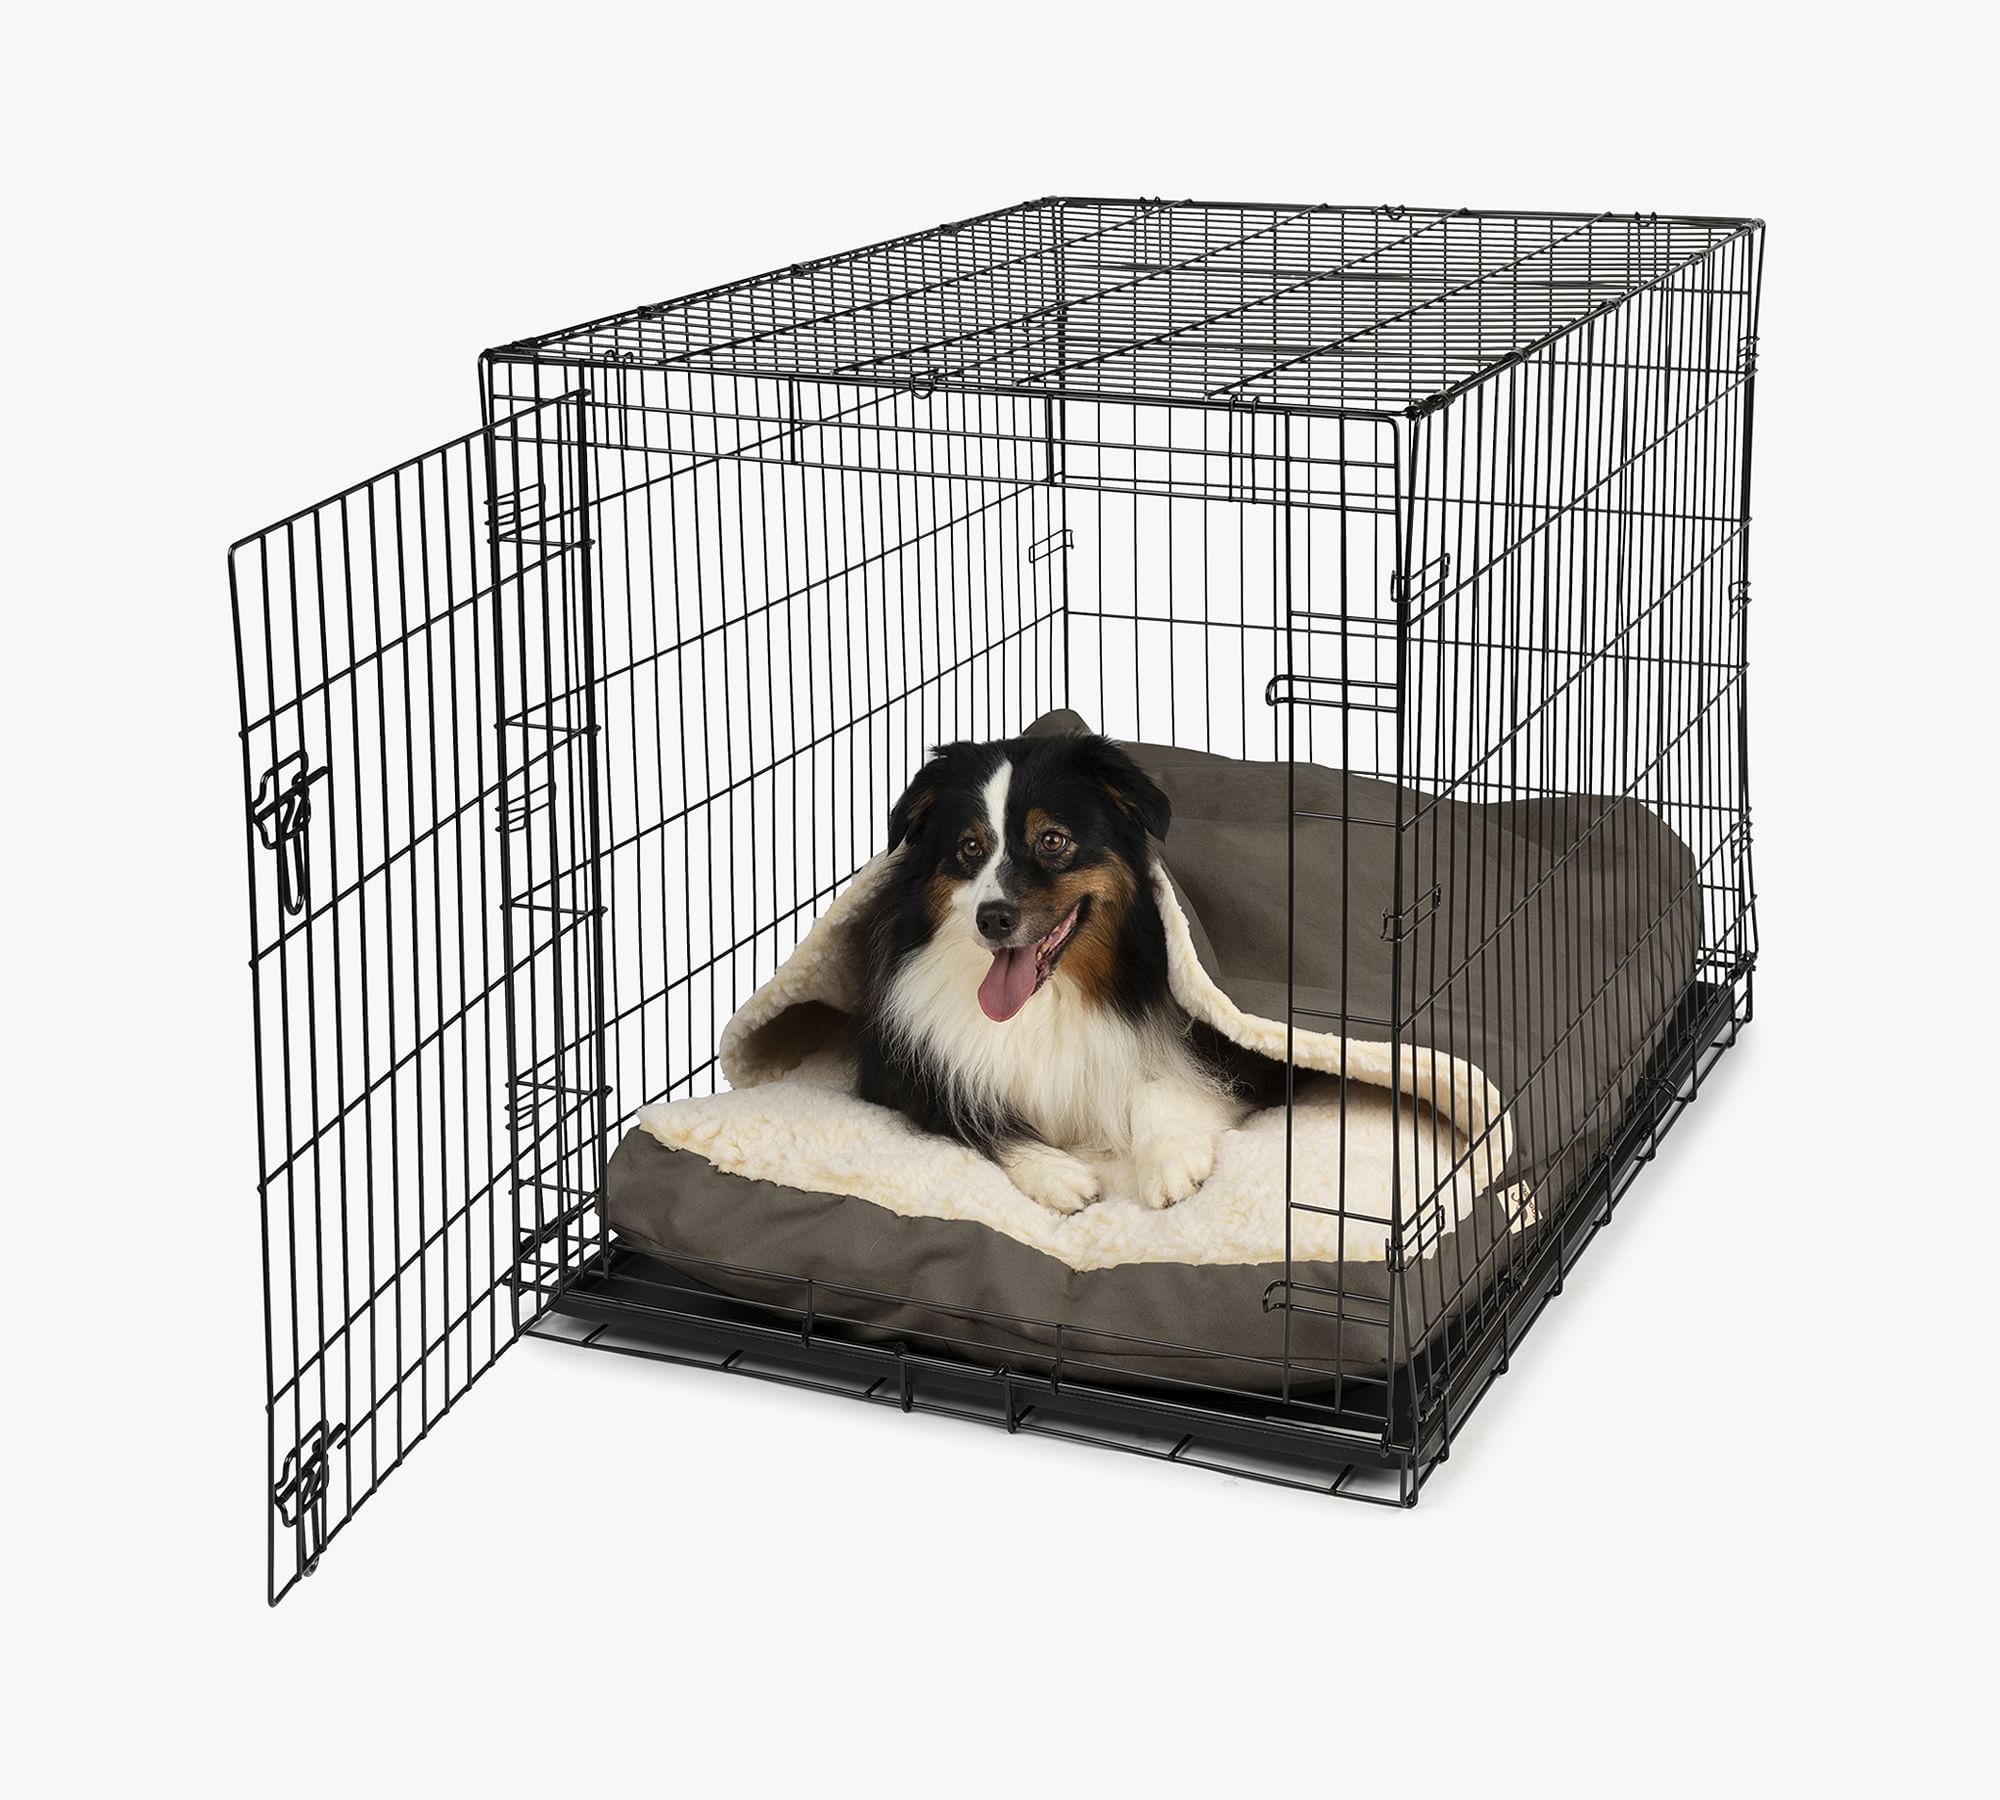 Luxury Microsuede Pet Crate Bed